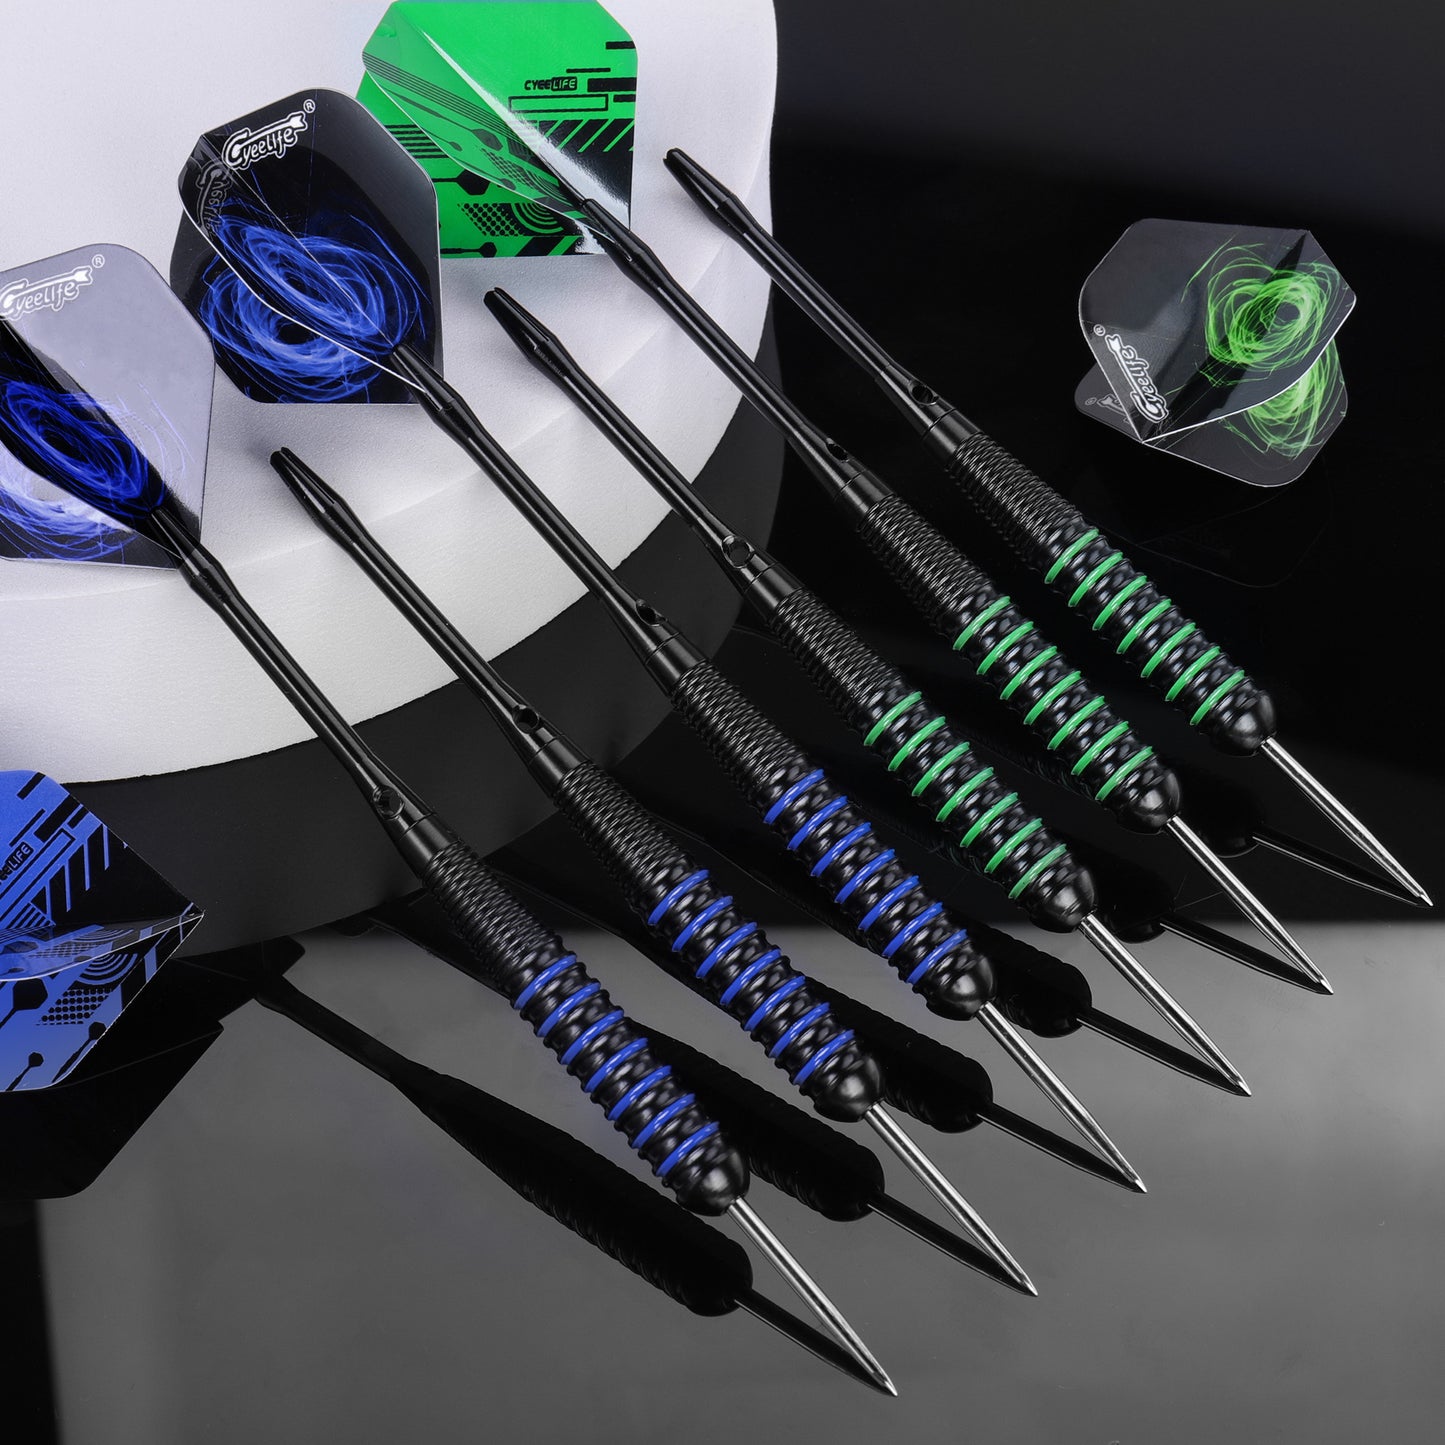 22g Steel tip darts set with Aluminum shafts,12PCS